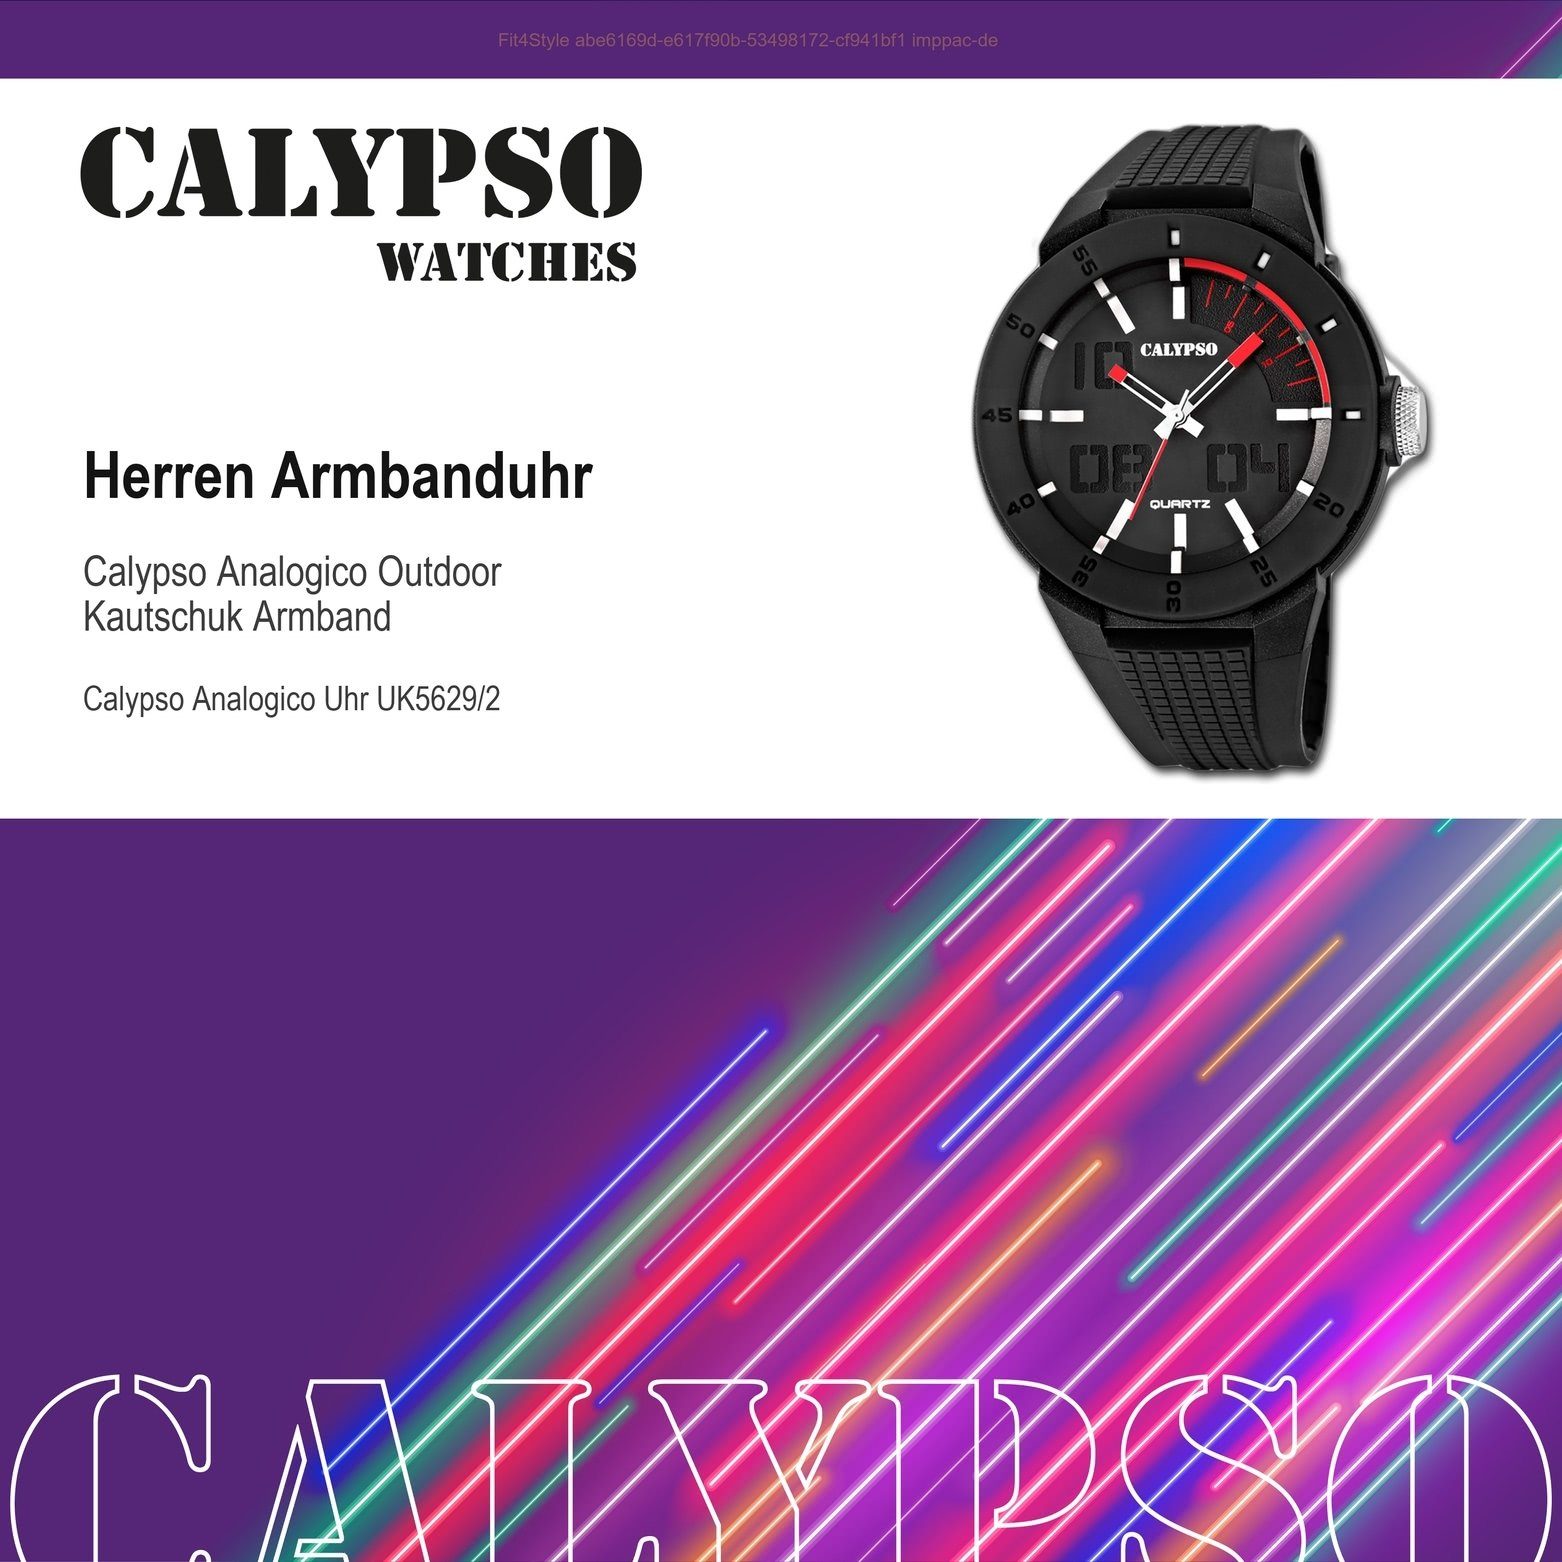 Armbanduhr Herren Outdoor Kunststoffband, WATCHES schwarz, K5629/2 Uhr rund, Kautschukarmband Calypso Quarzuhr Herren CALYPSO